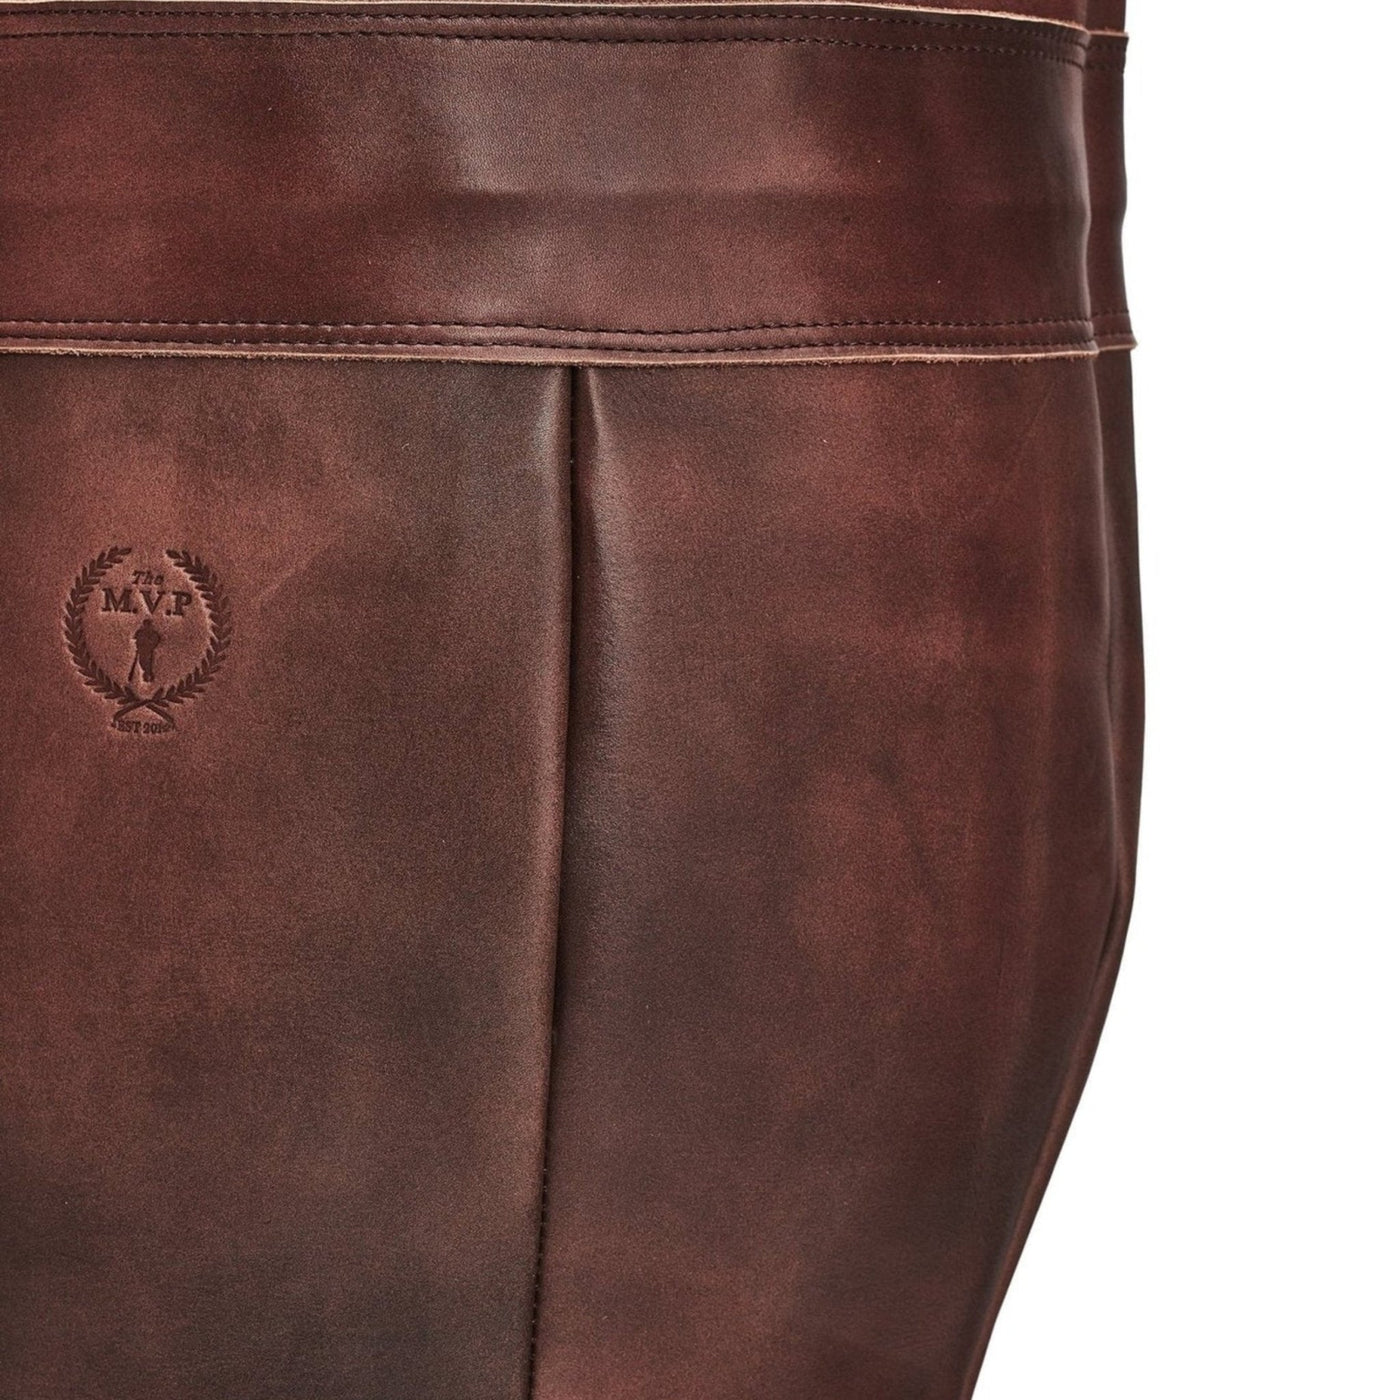 Heritage Brown Leather Uppercut Bag (un-filled) - MODEST VINTAGE PLAYER LTD